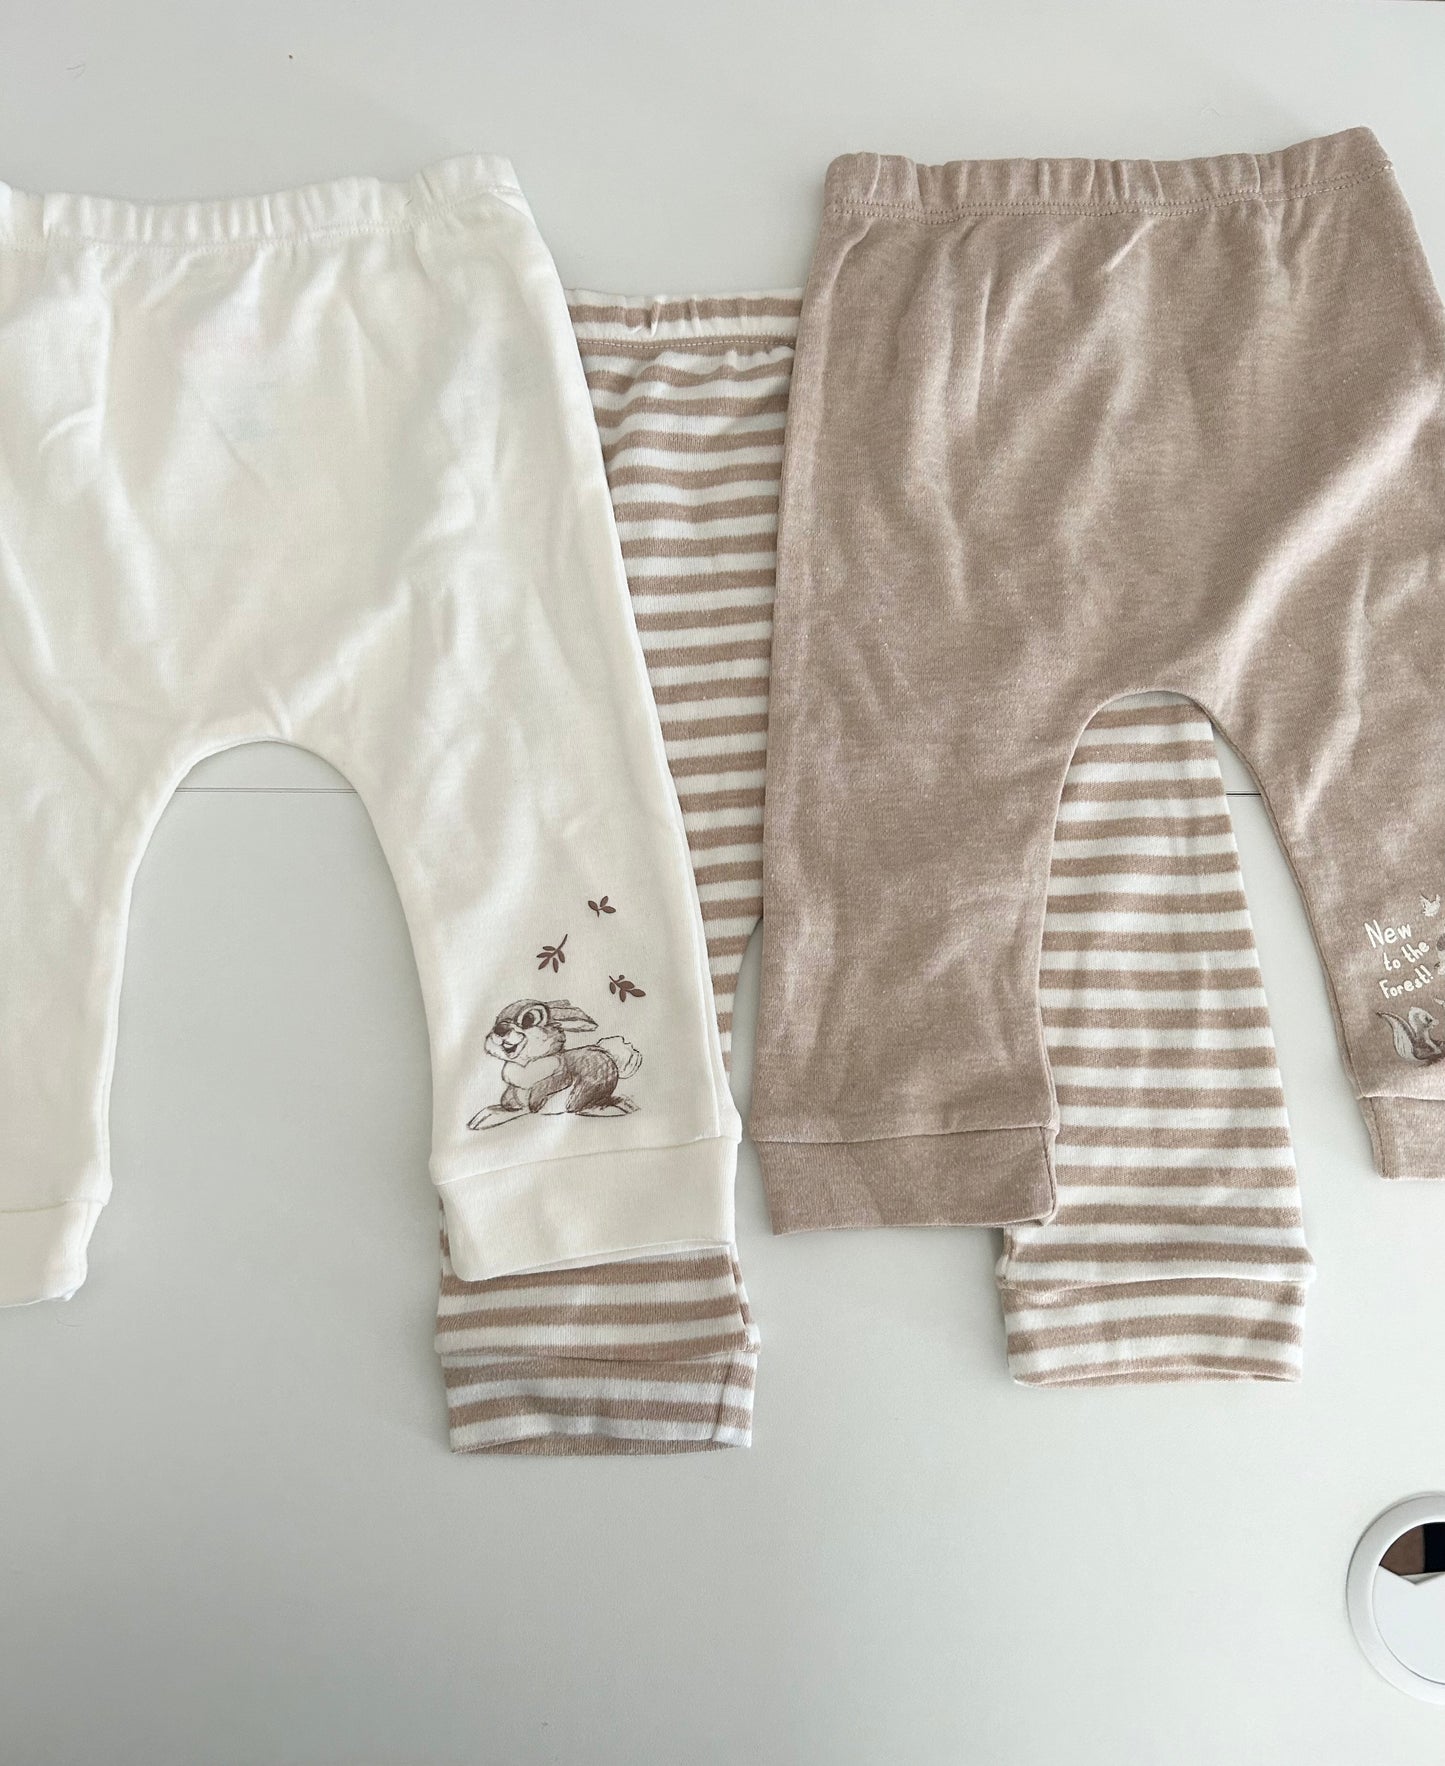 Disney Baby | Bambi Onesie + Pants Bundle | Gender Neutral | Off White & Brown | 6-9 months